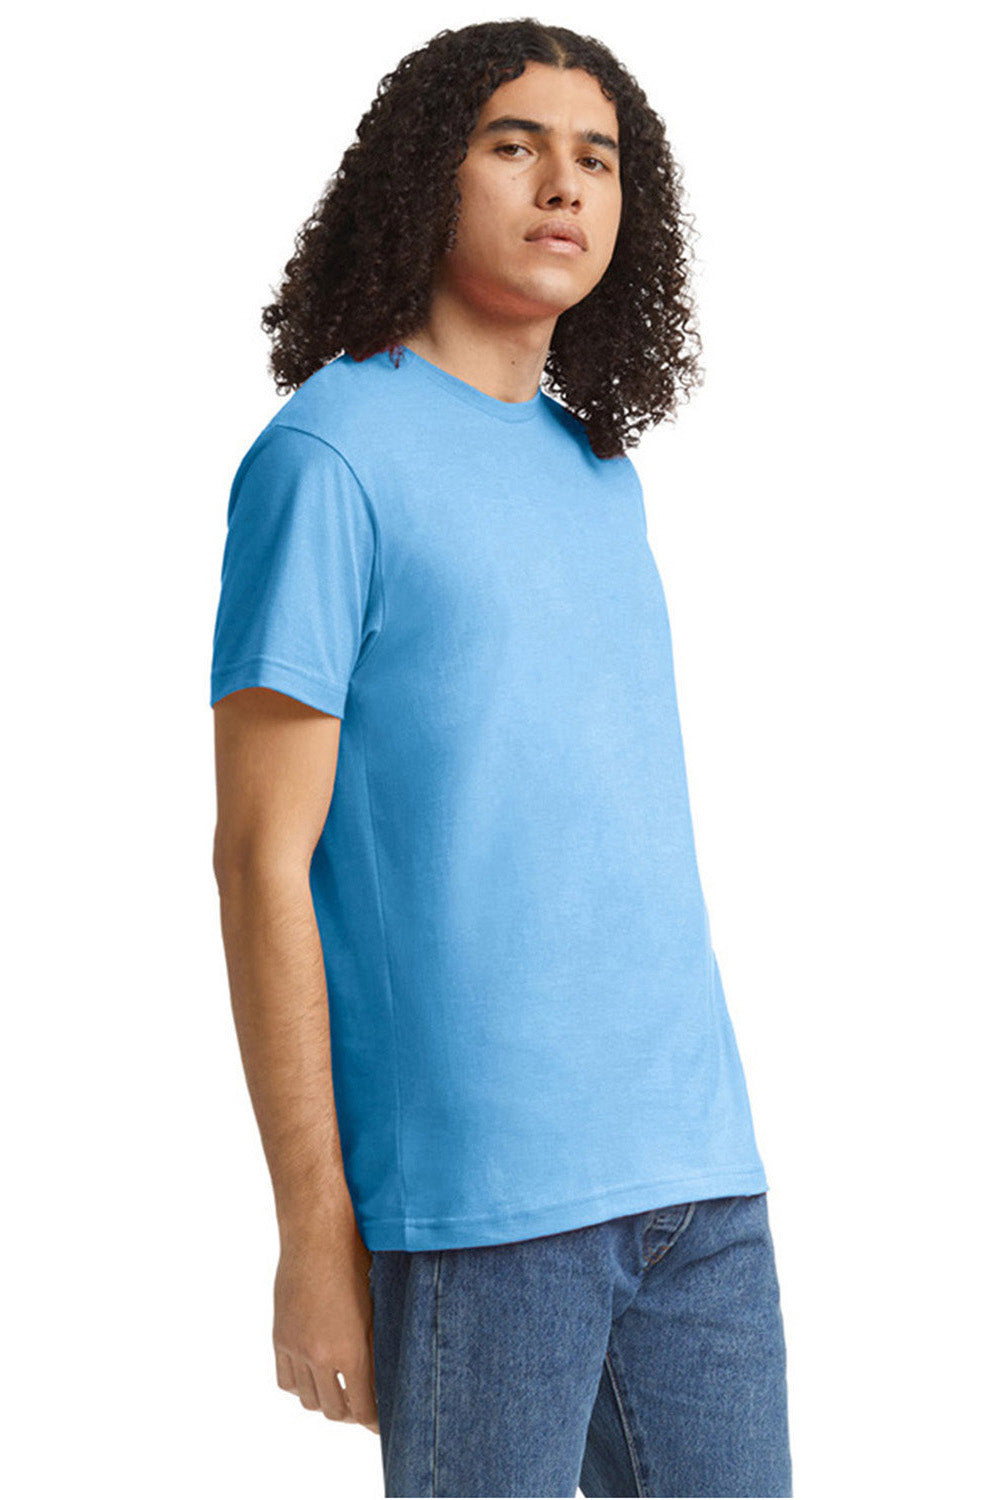 American Apparel 2001CVC Mens CVC Short Sleeve Crewneck T-Shirt Heather Light Blue Model Side